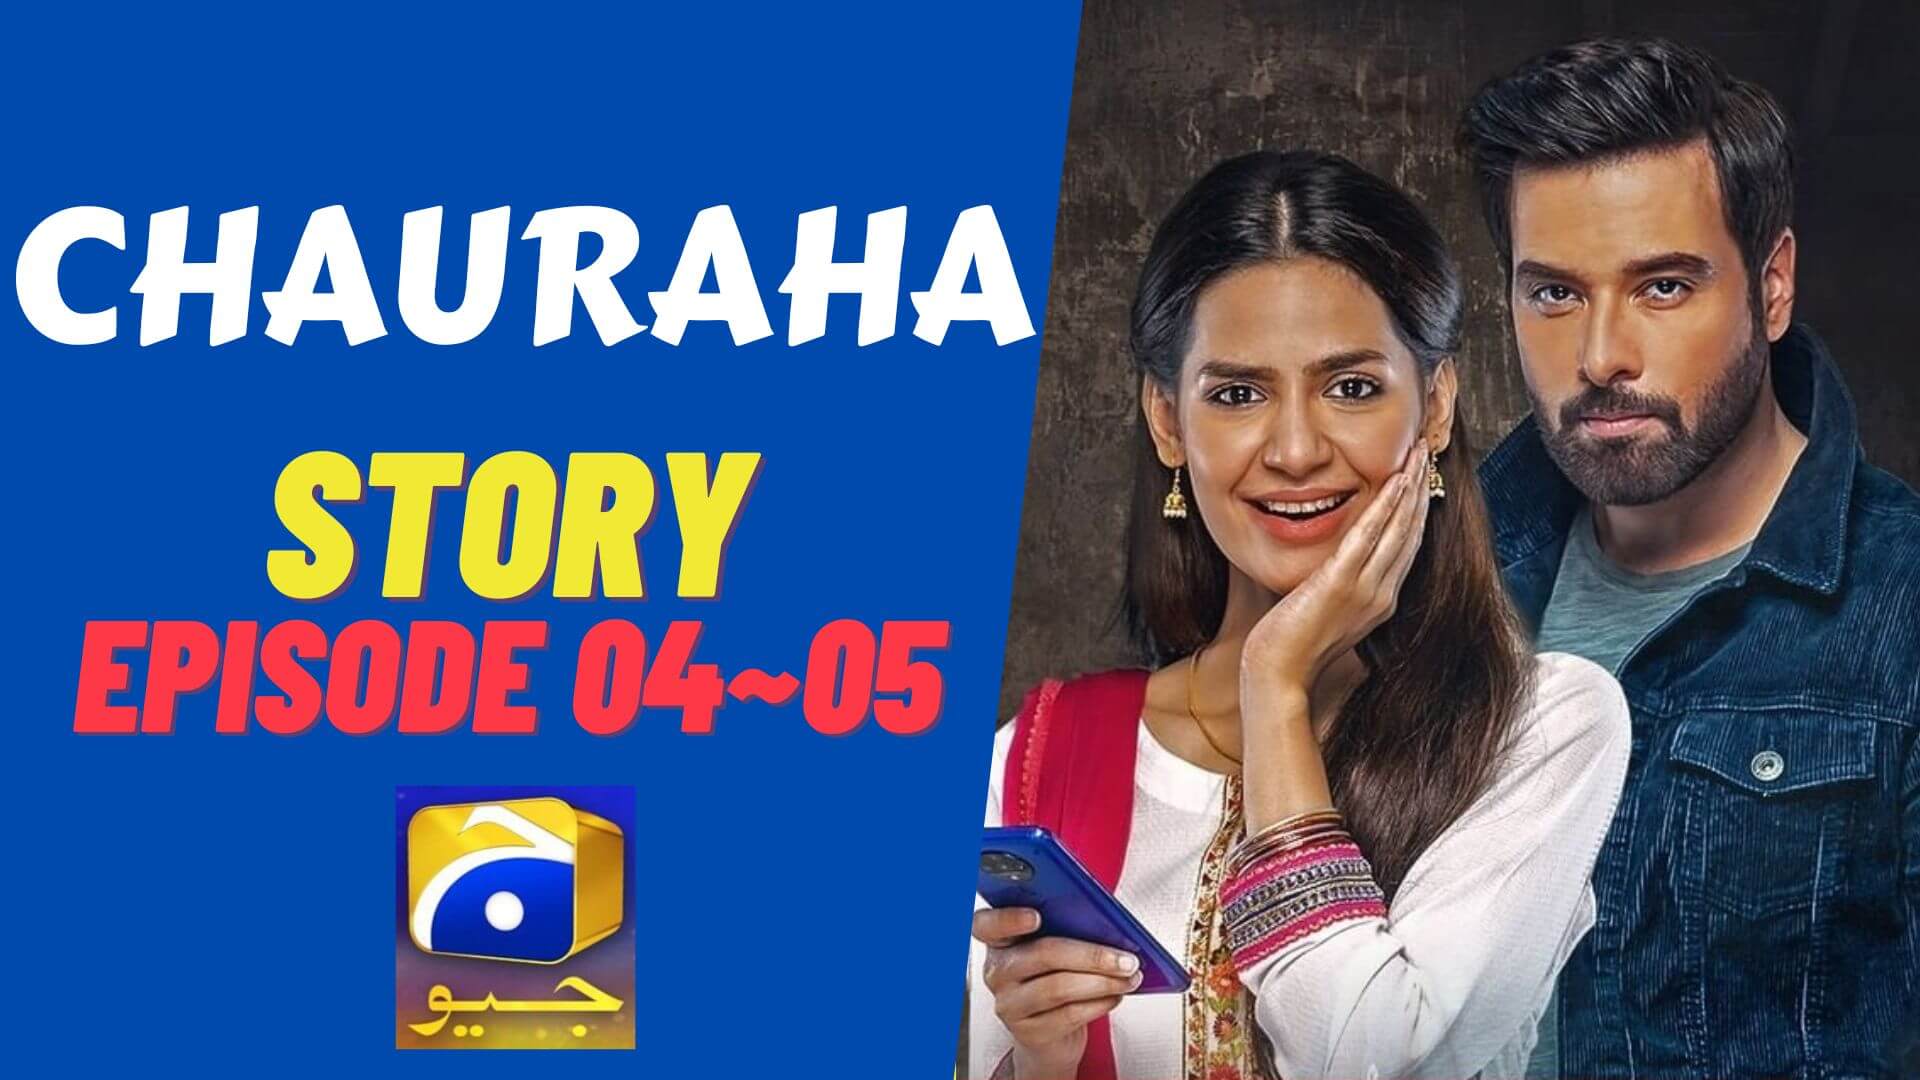 Chauraha Episode 04_05 Story